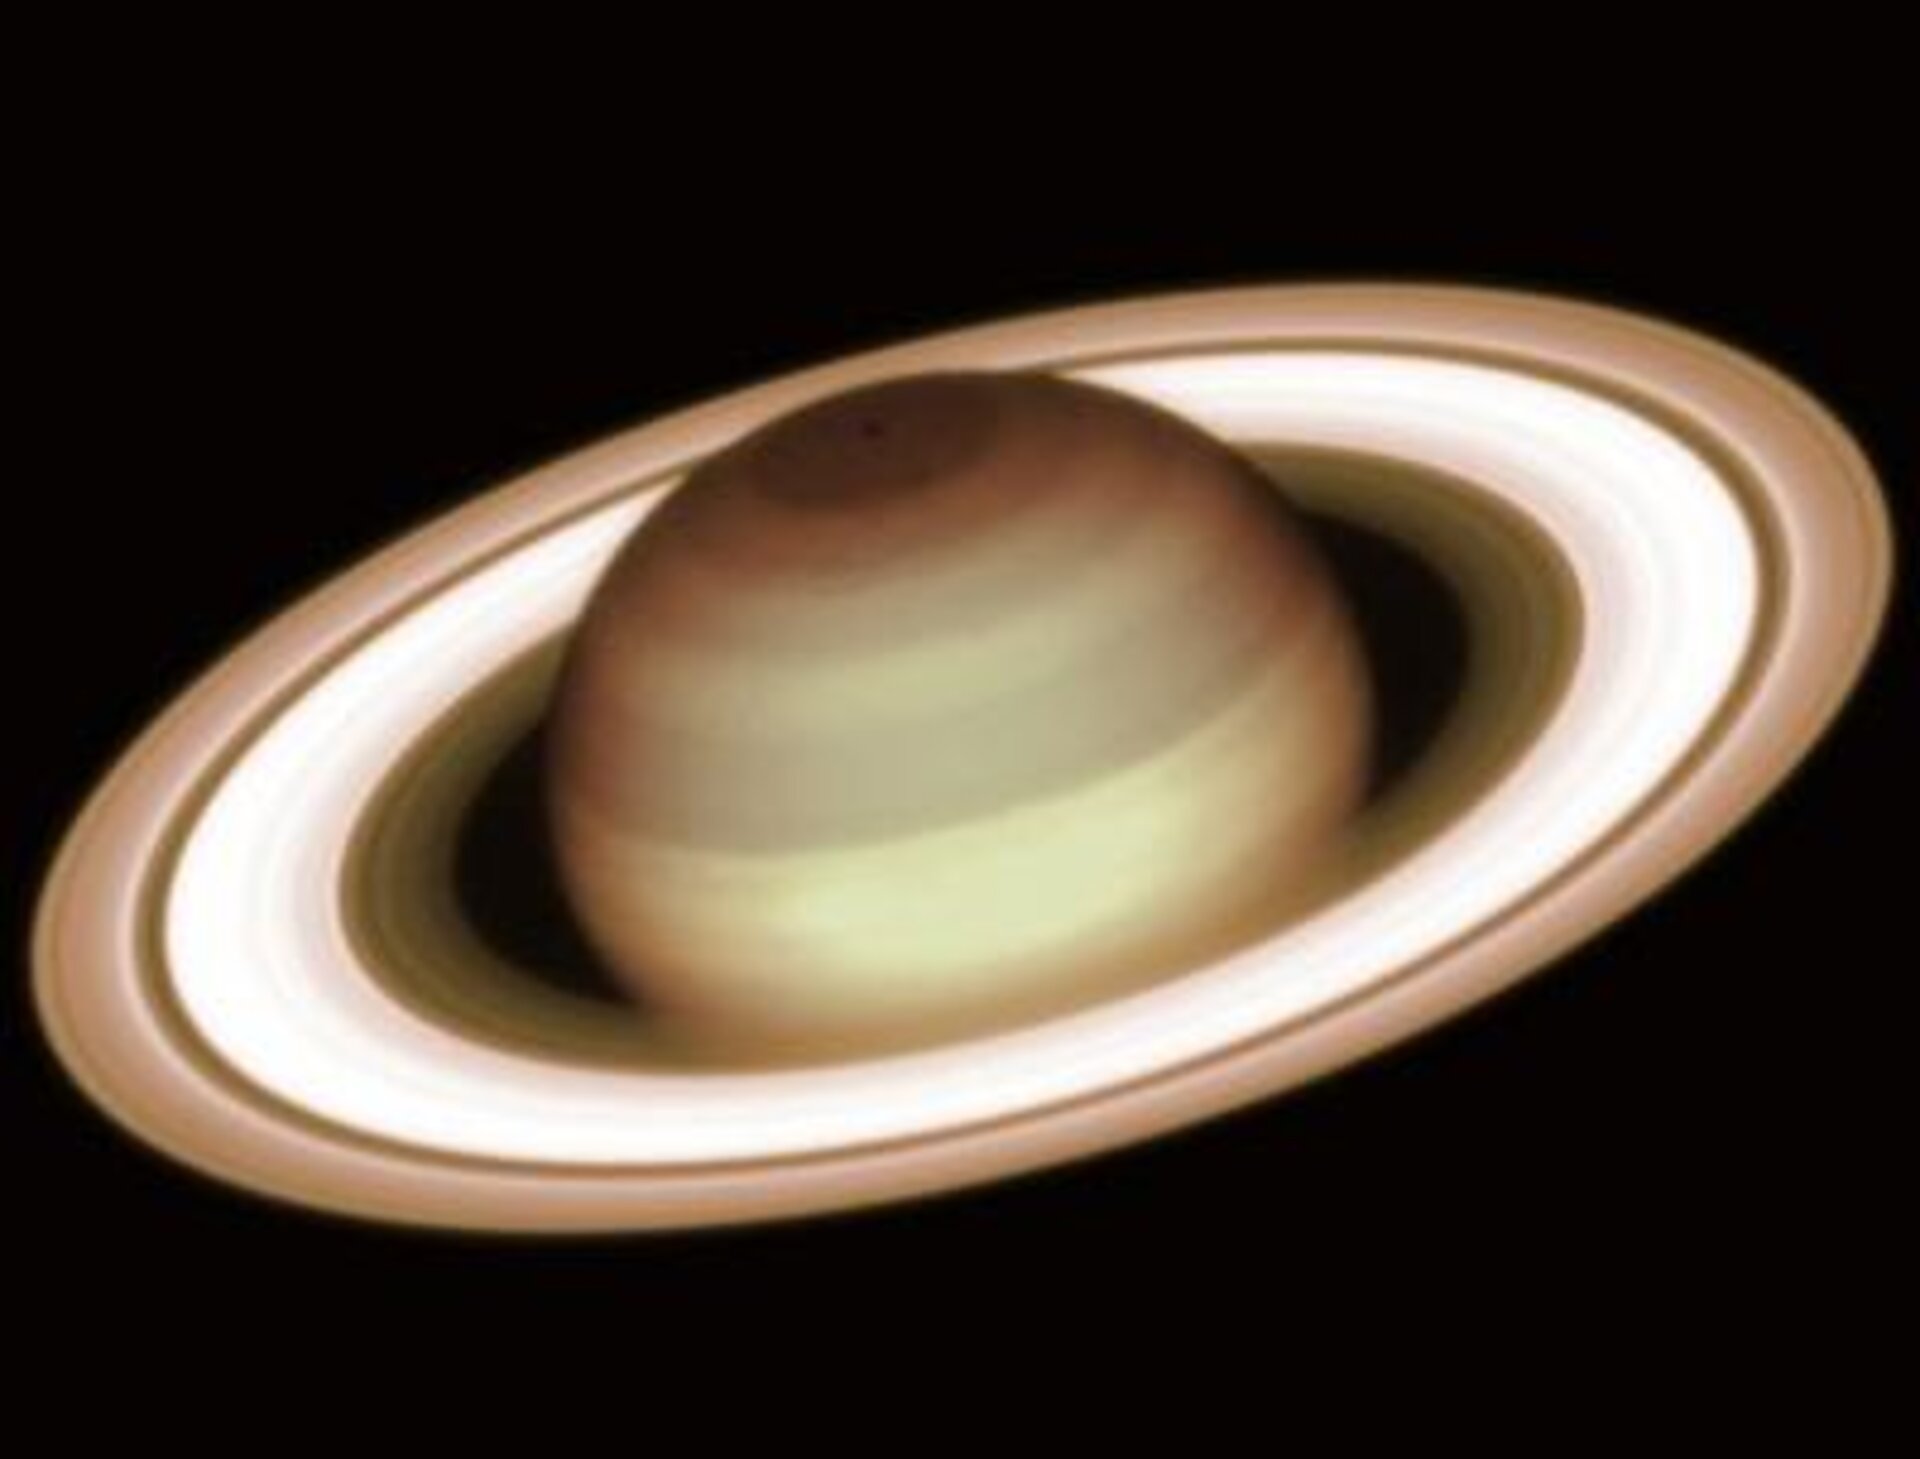 De planeet Saturnus